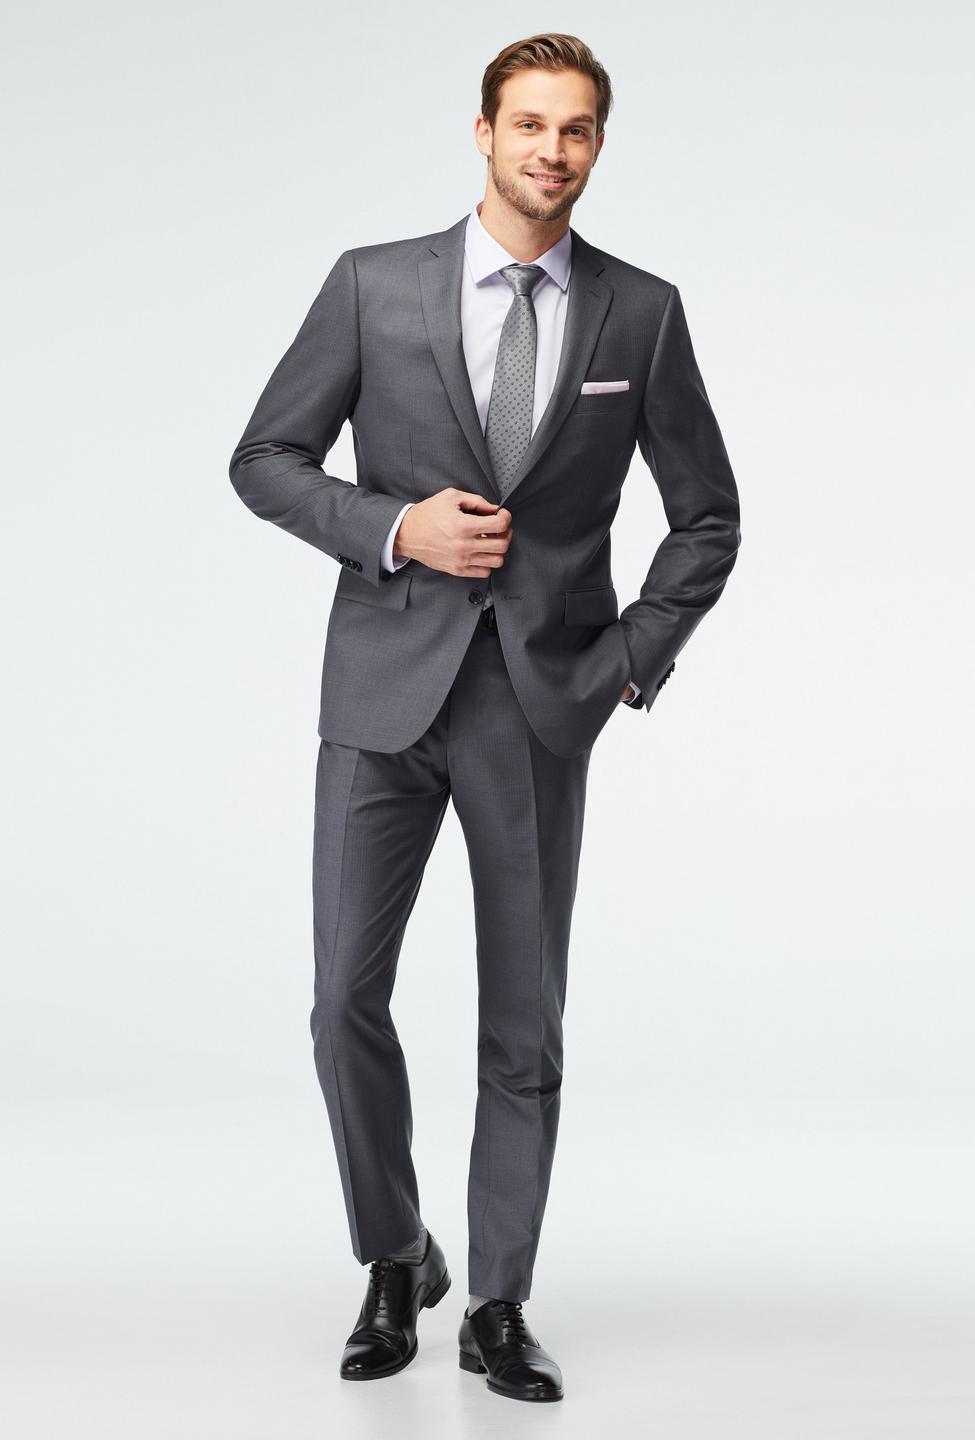 Highbridge Fineline Gray Suit